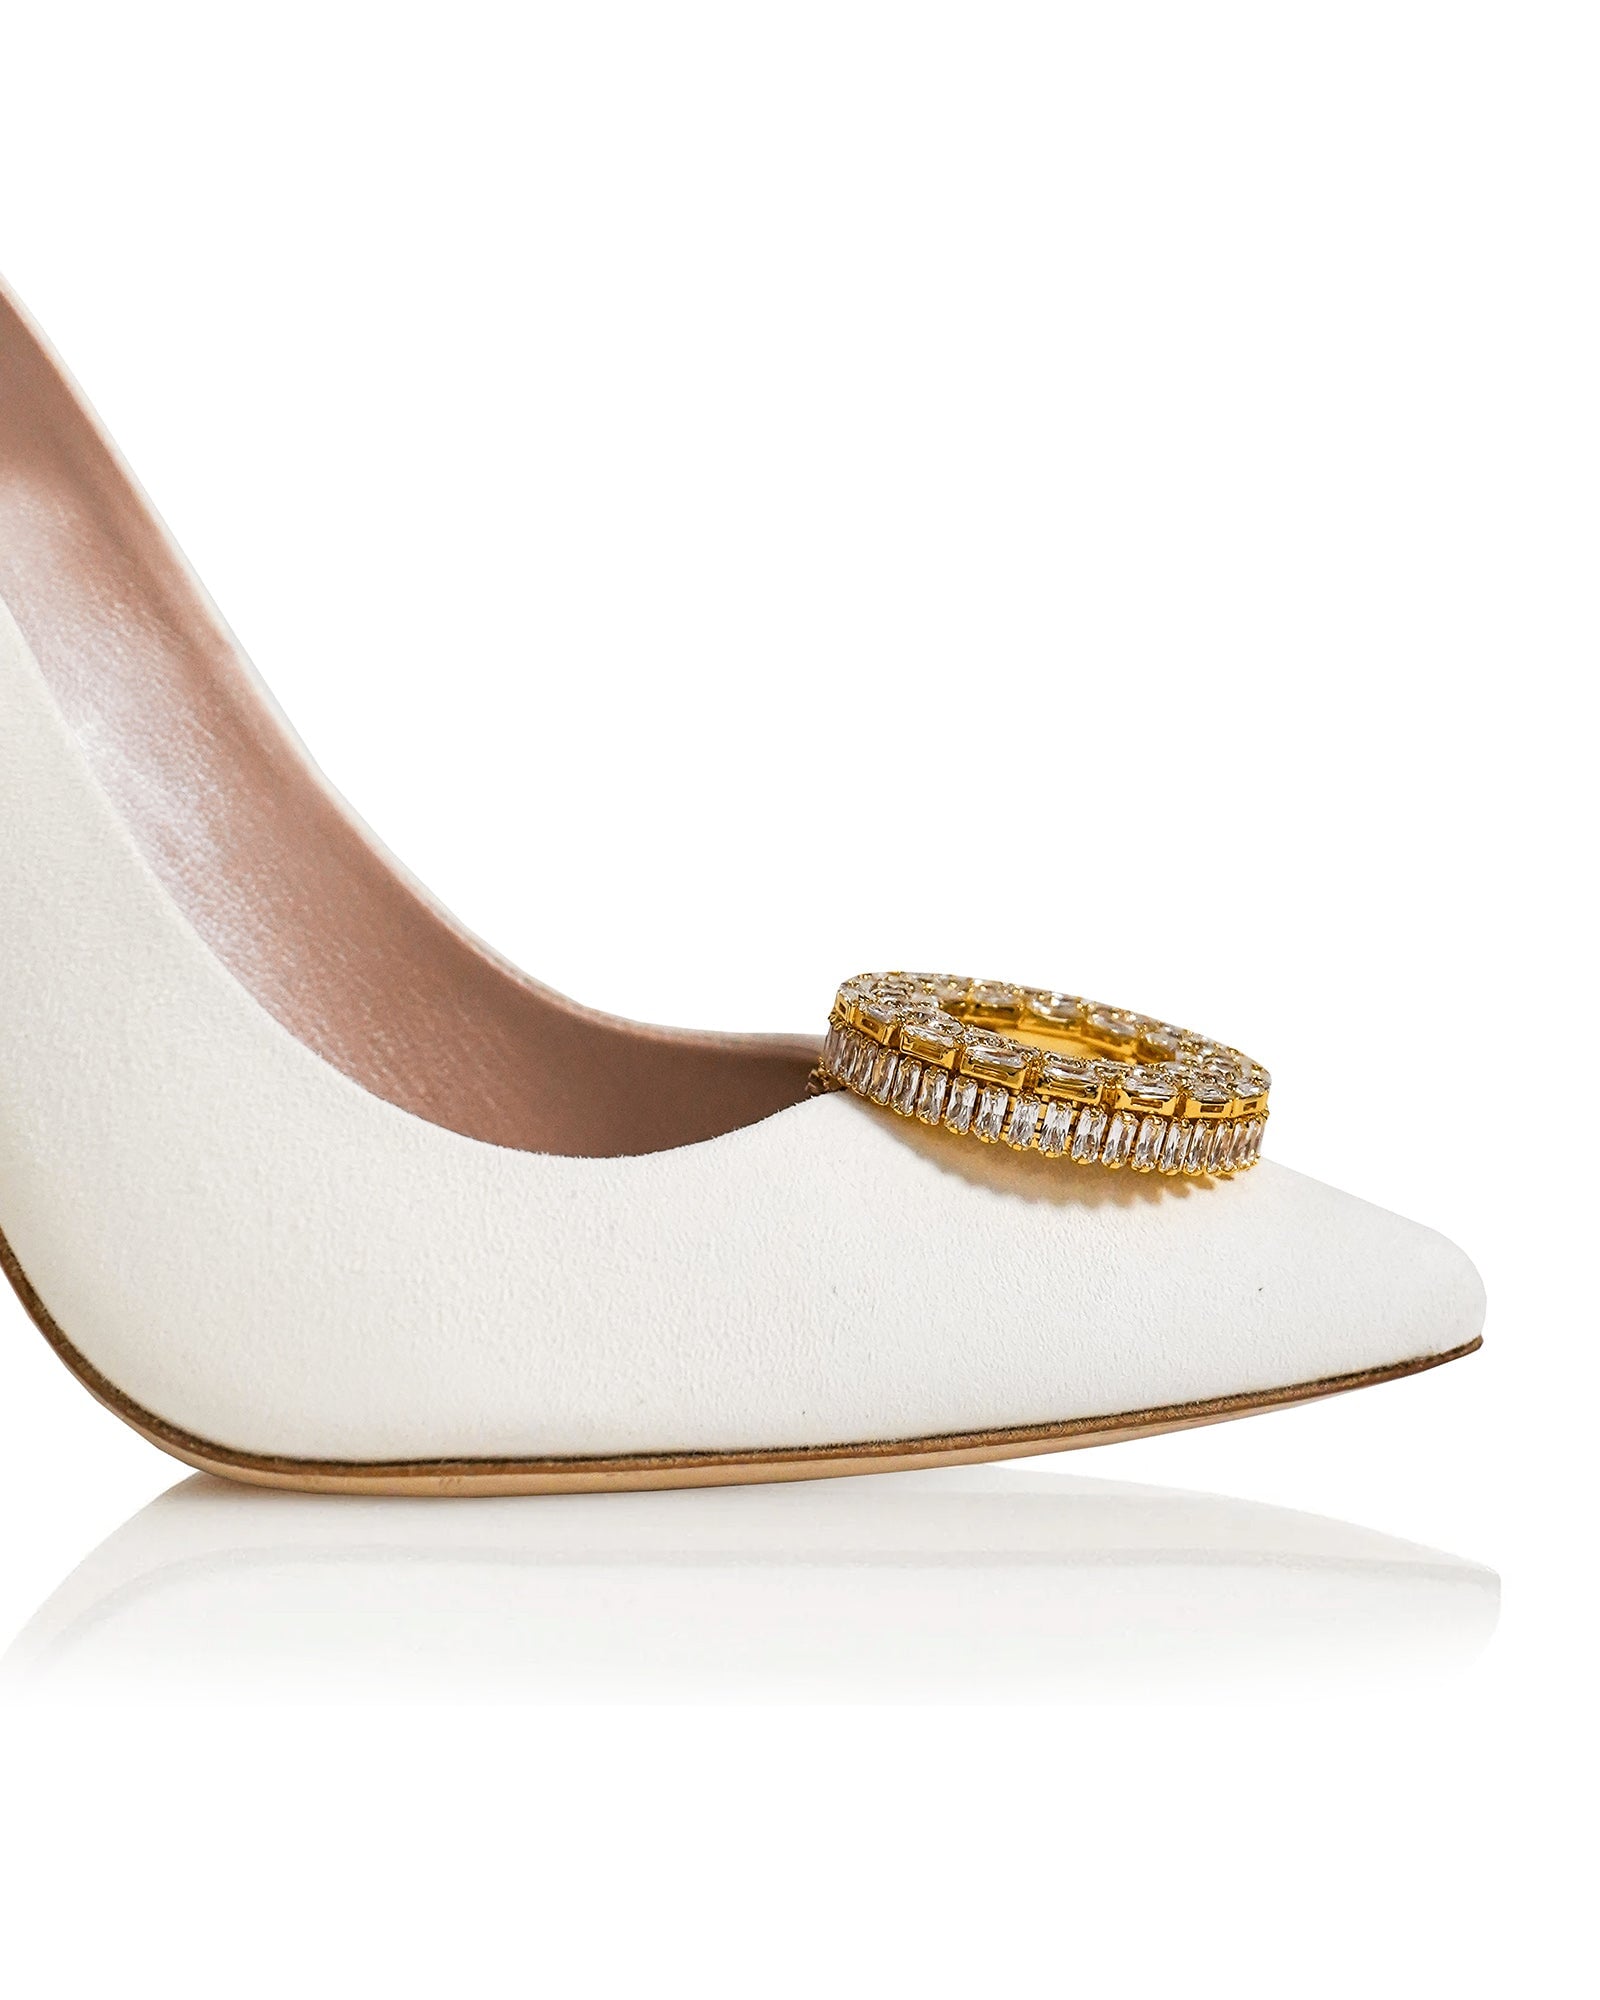 Orbit Crystal & Gold Shoe Clips Shoe Clip Crystal Shoe Clip  image